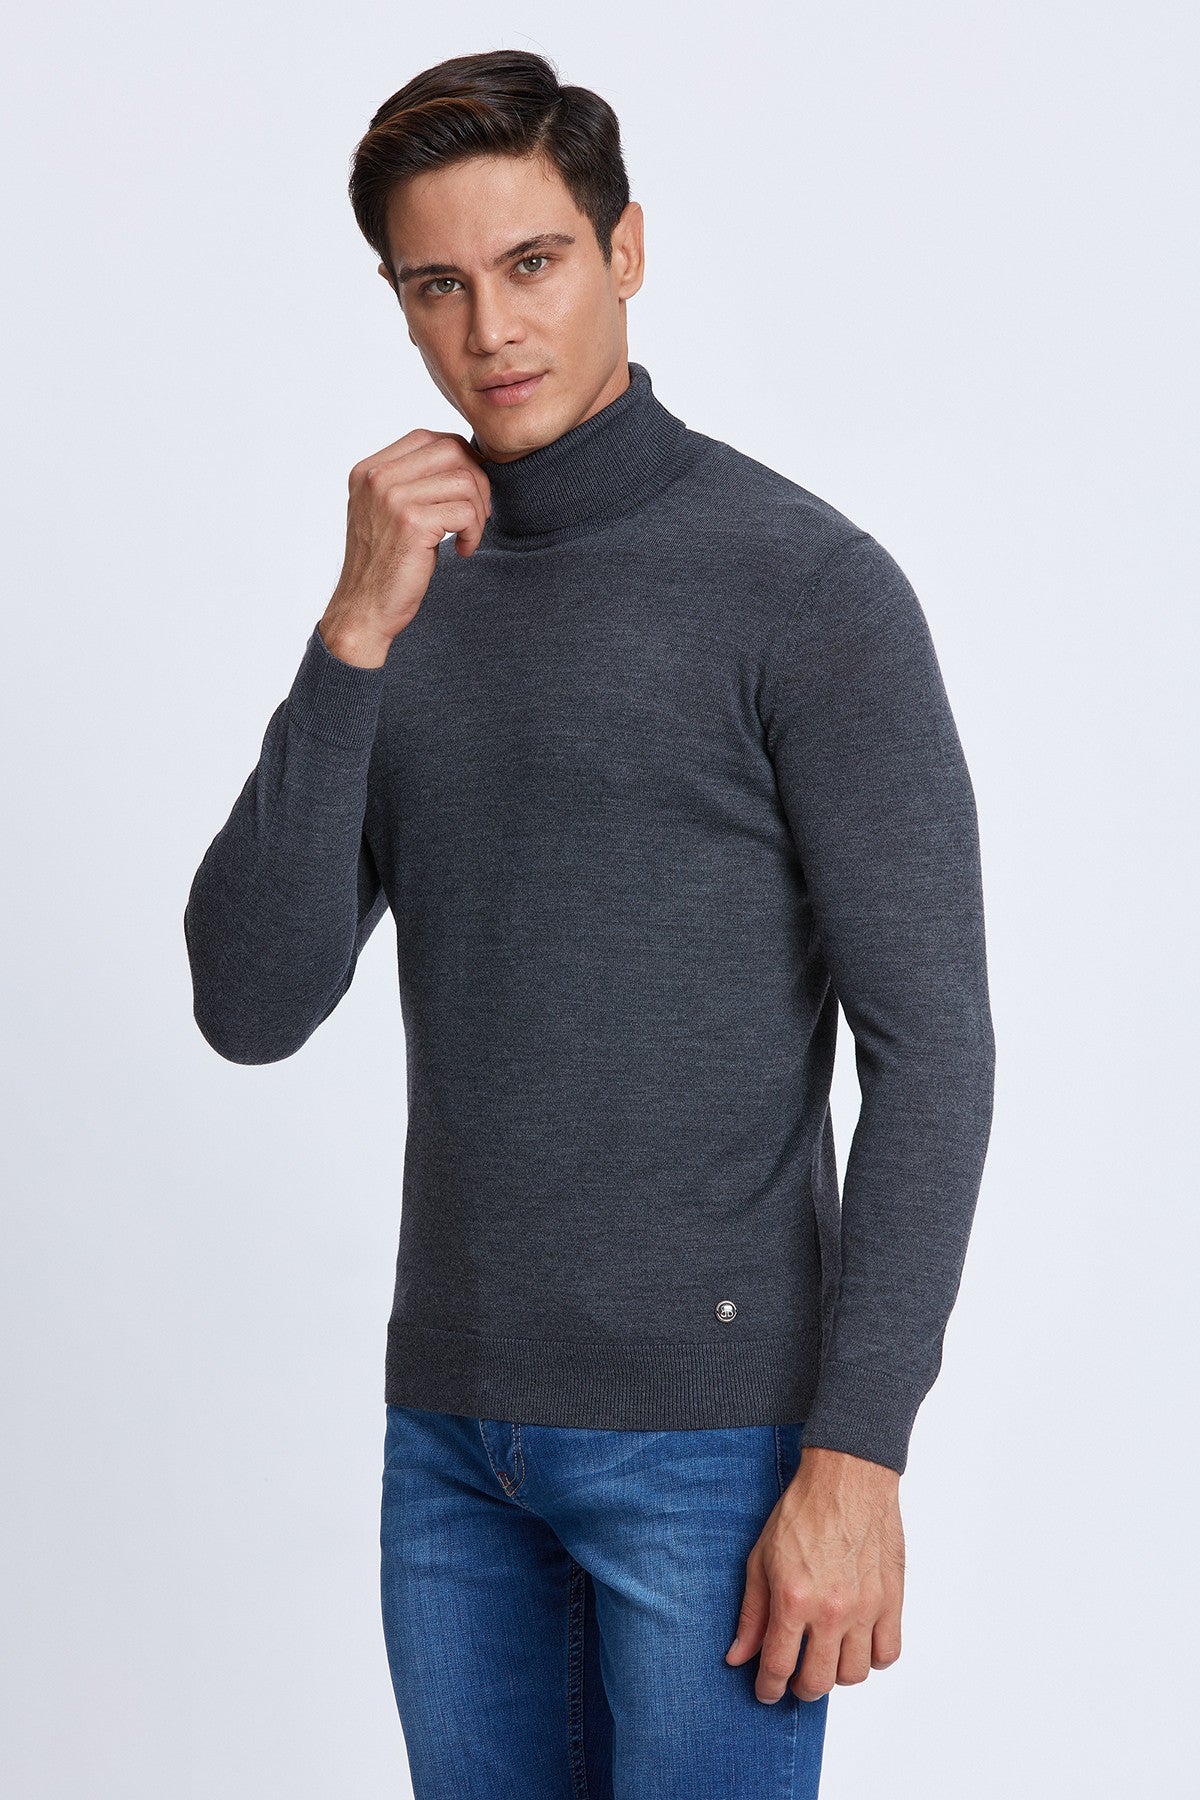 Turtleneck Merino Sweater in Charcoal